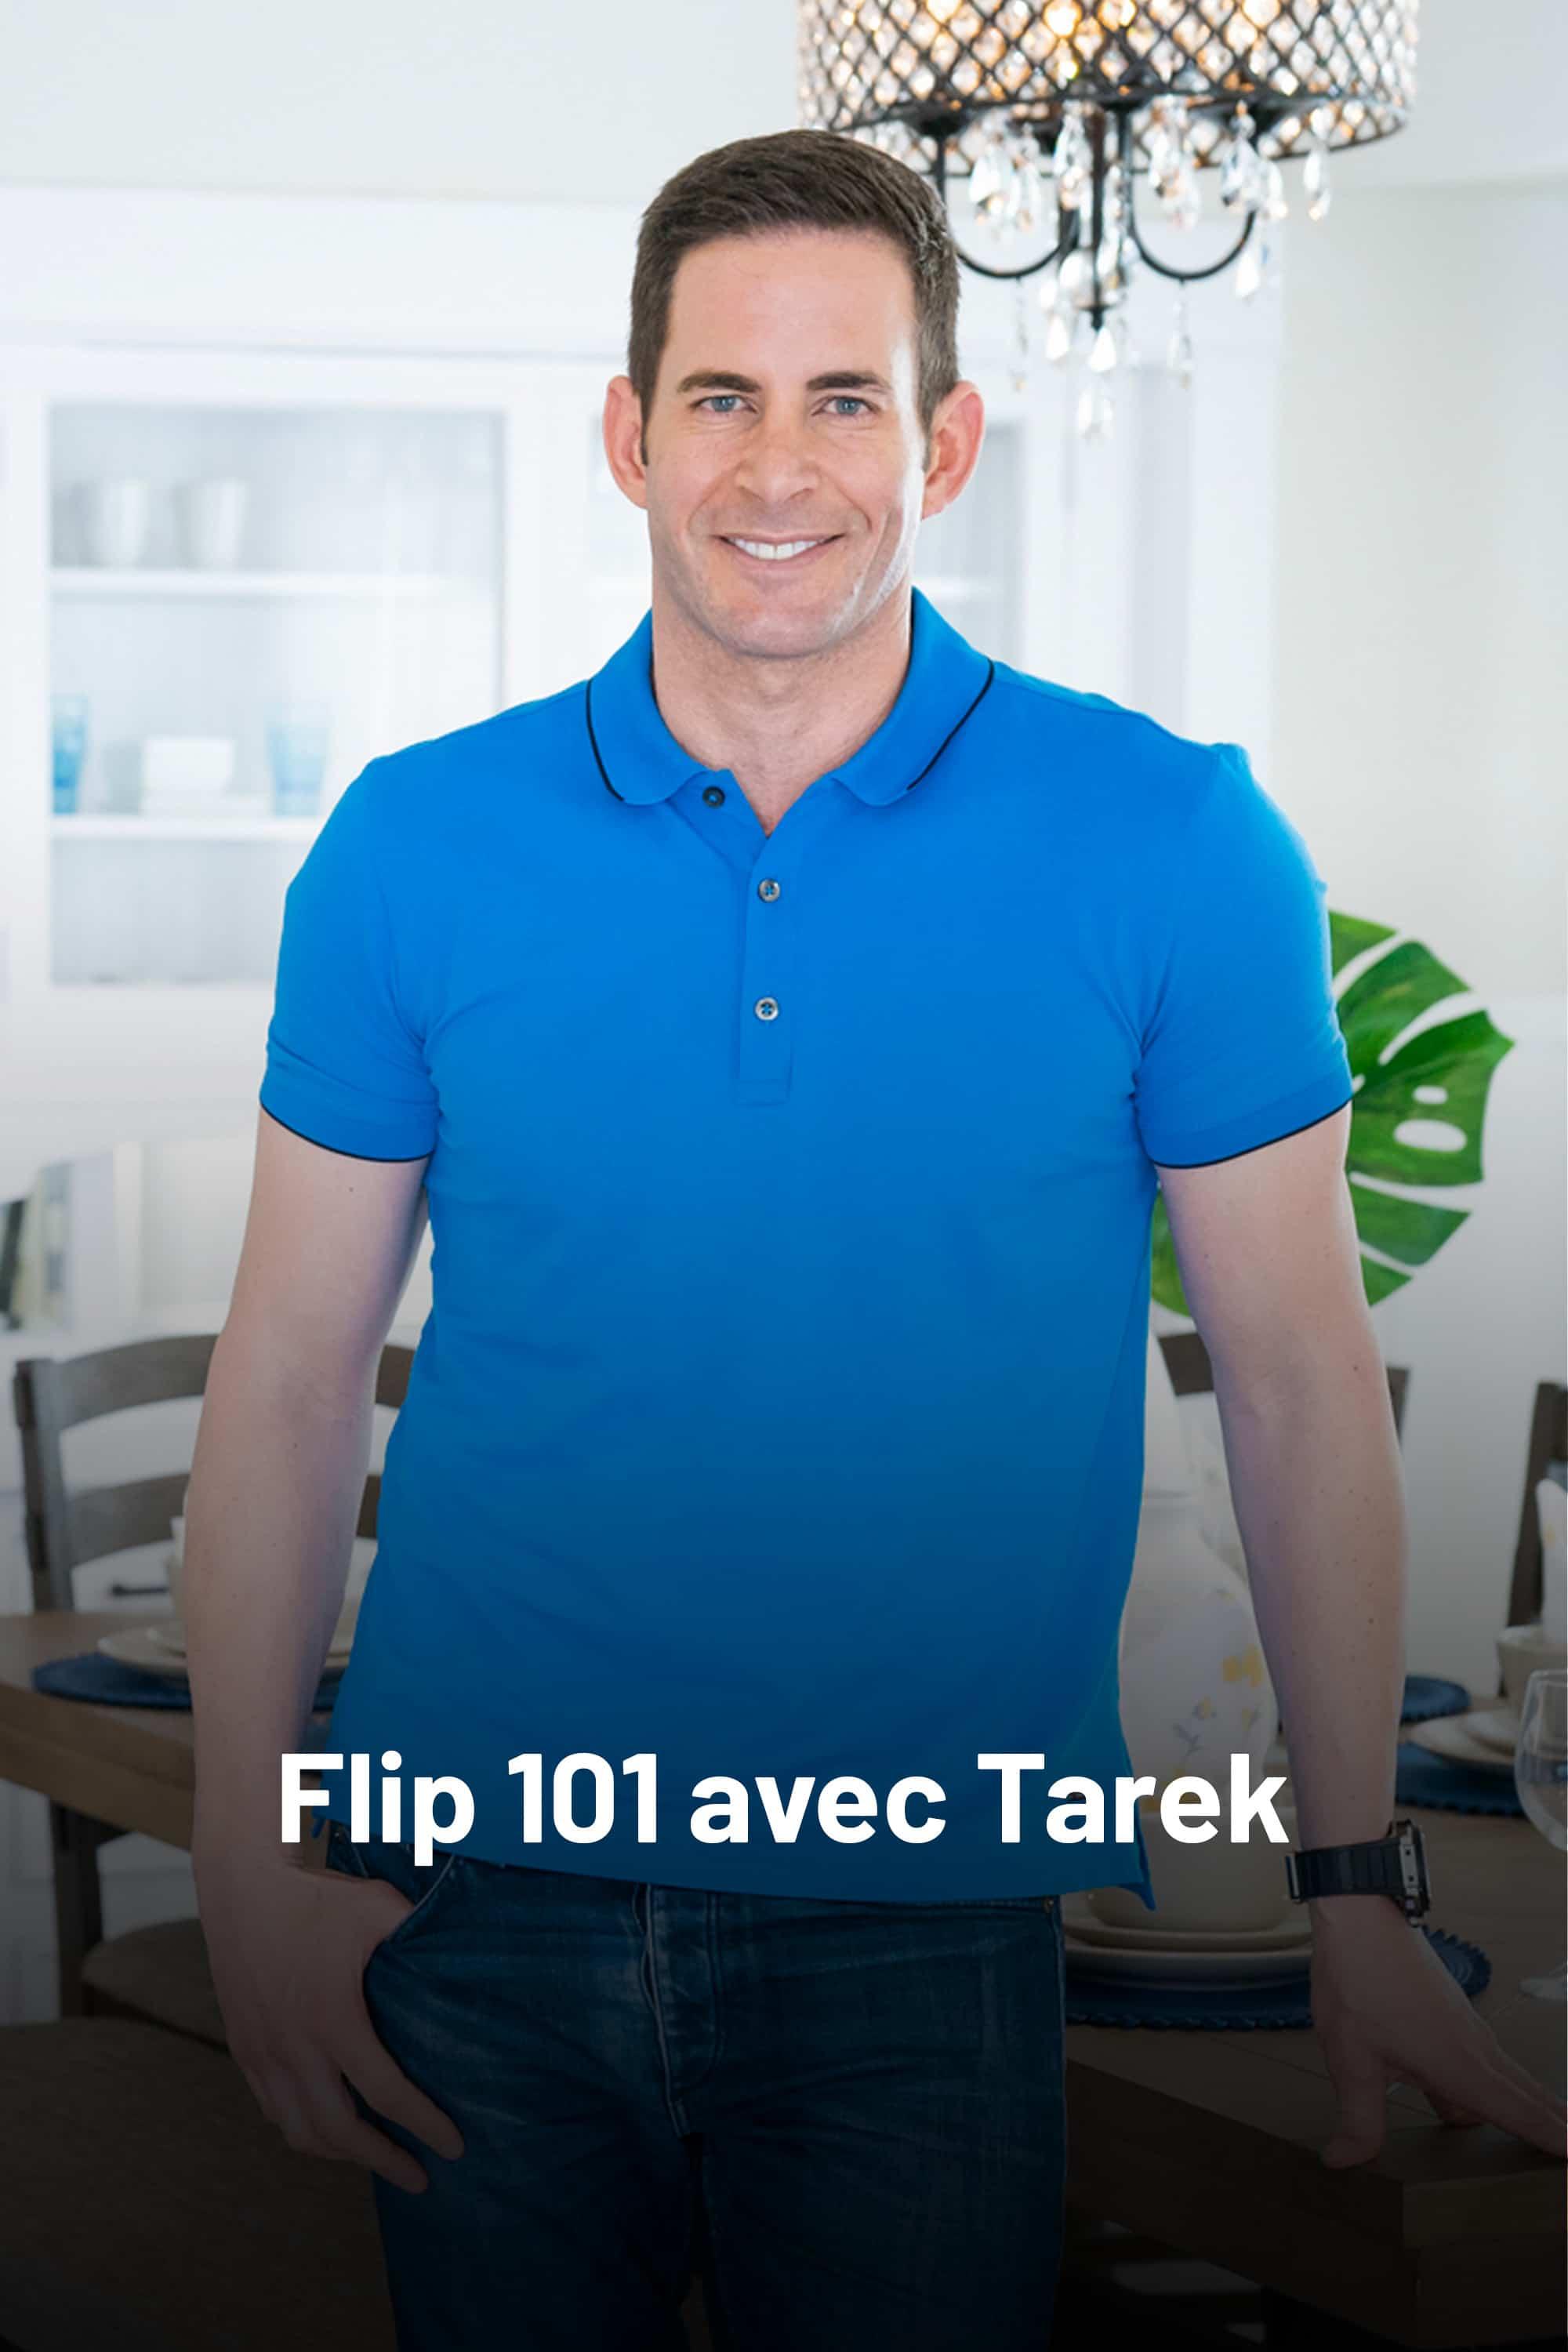 Flip 101 avec Tarek